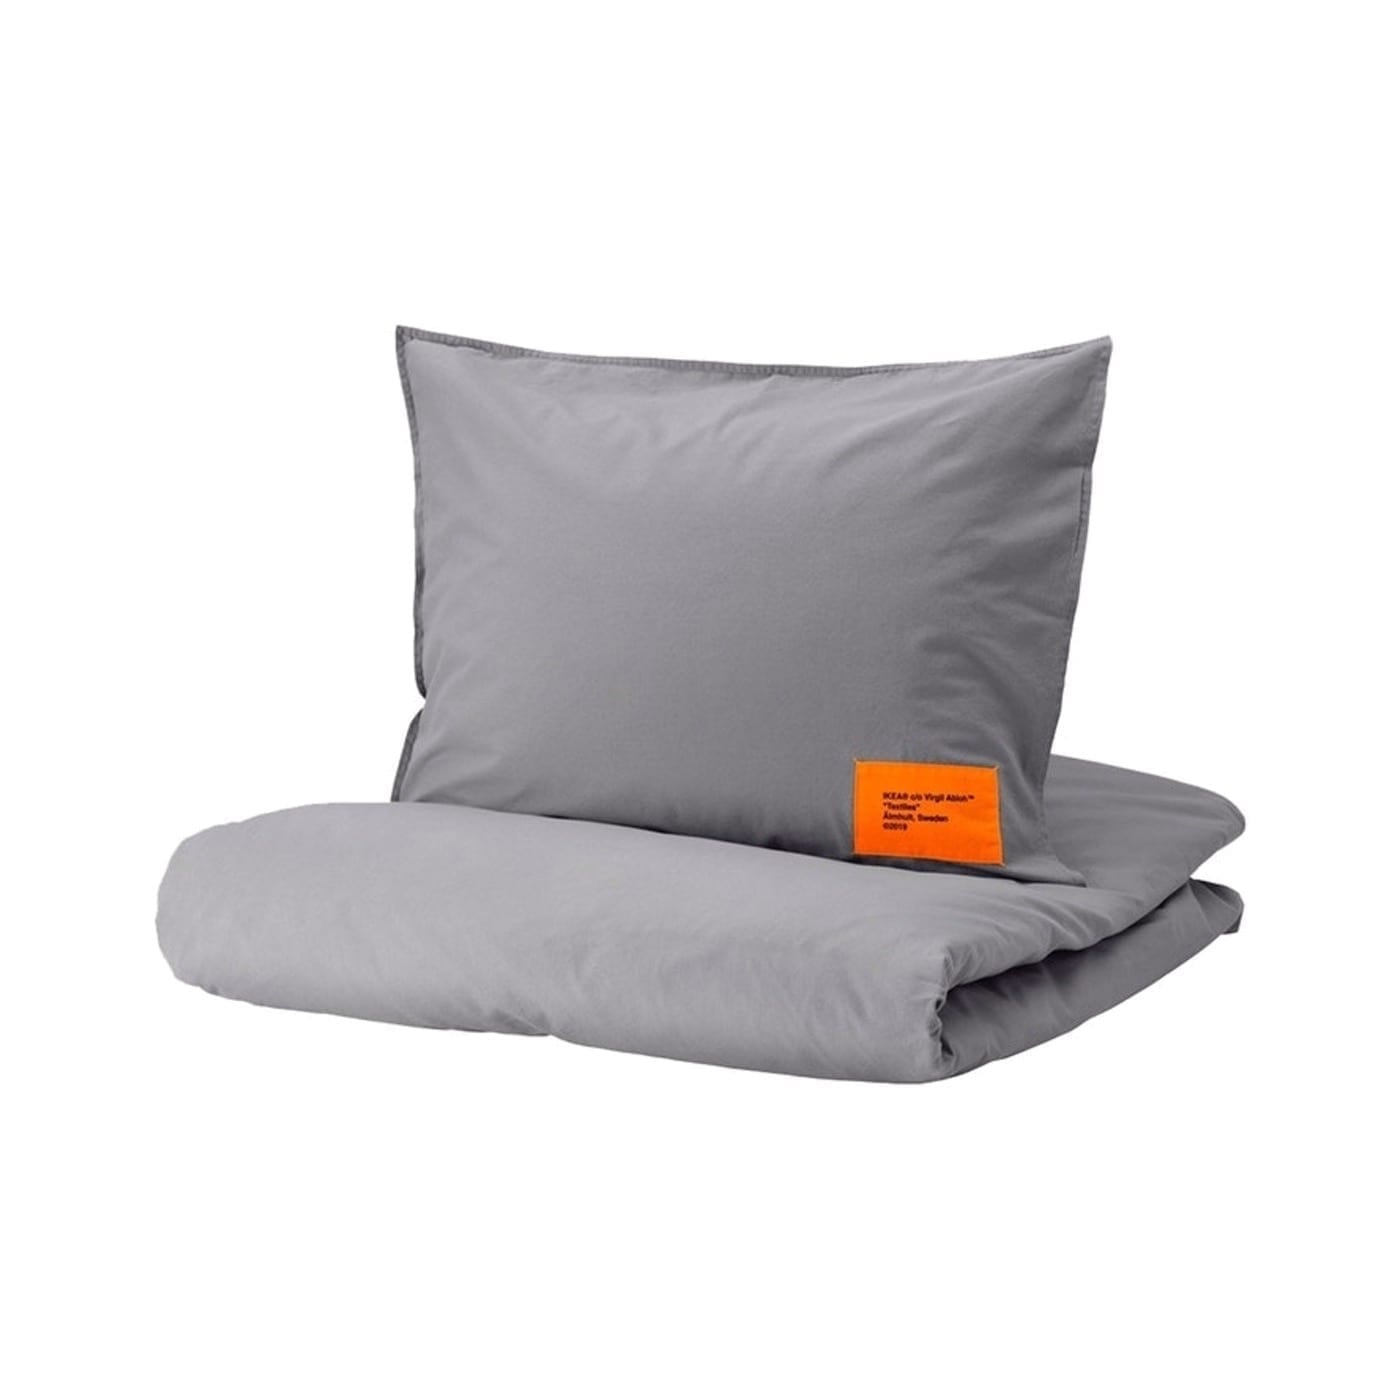 Virgil Abloh x IKEA MARKERAD EU Duvet Cover and 1 Pillowcase (150x200cm) Gray